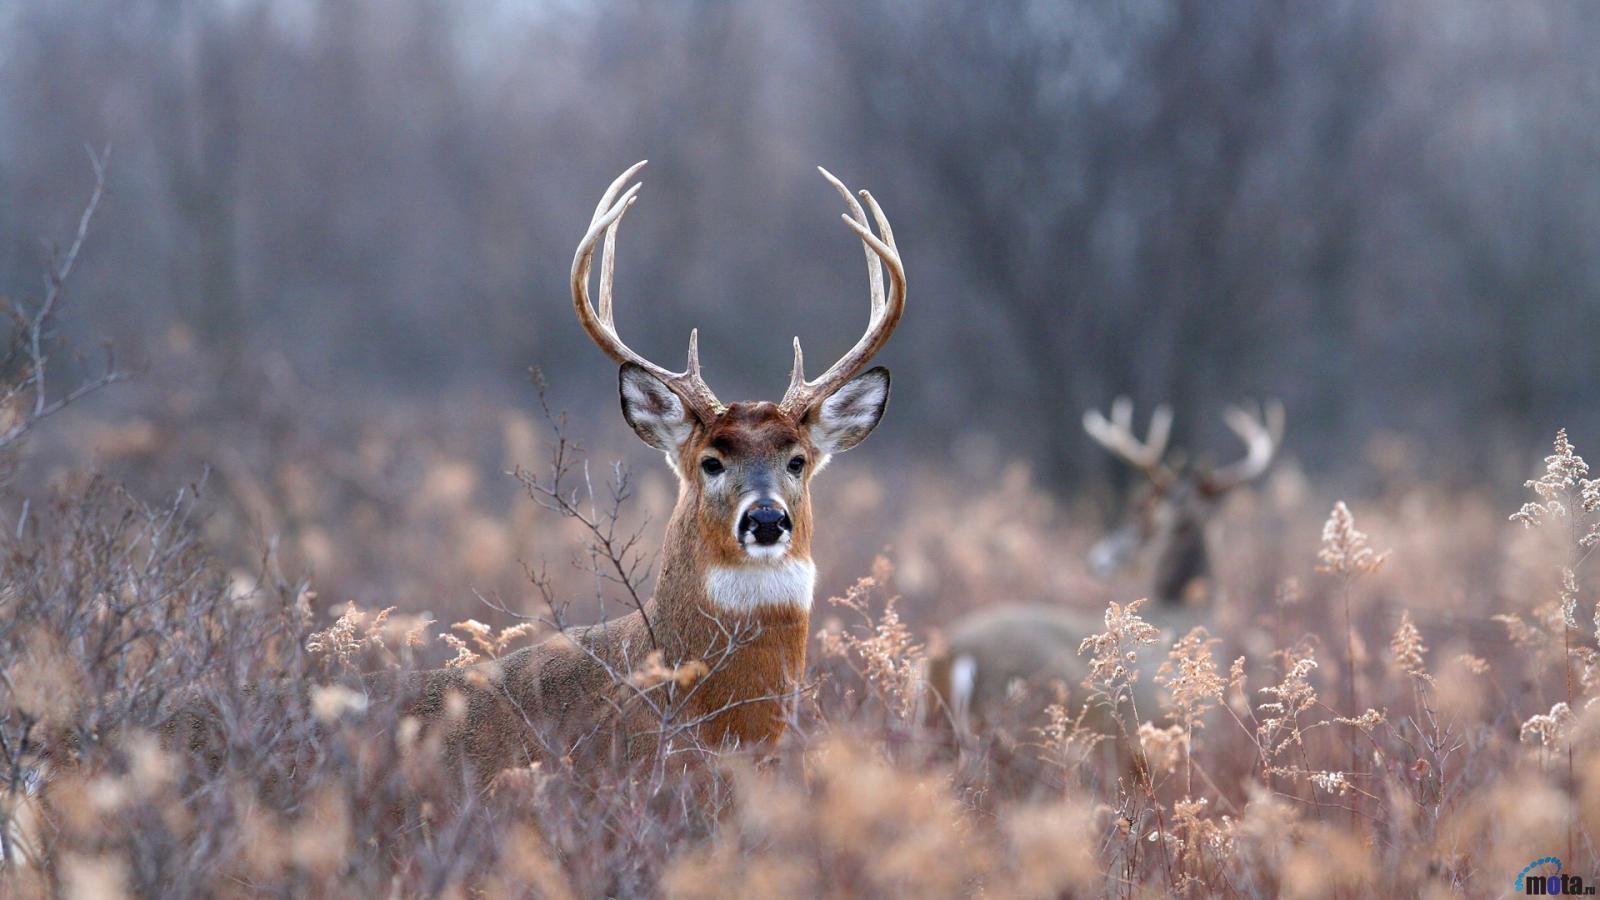 deer images 1080p